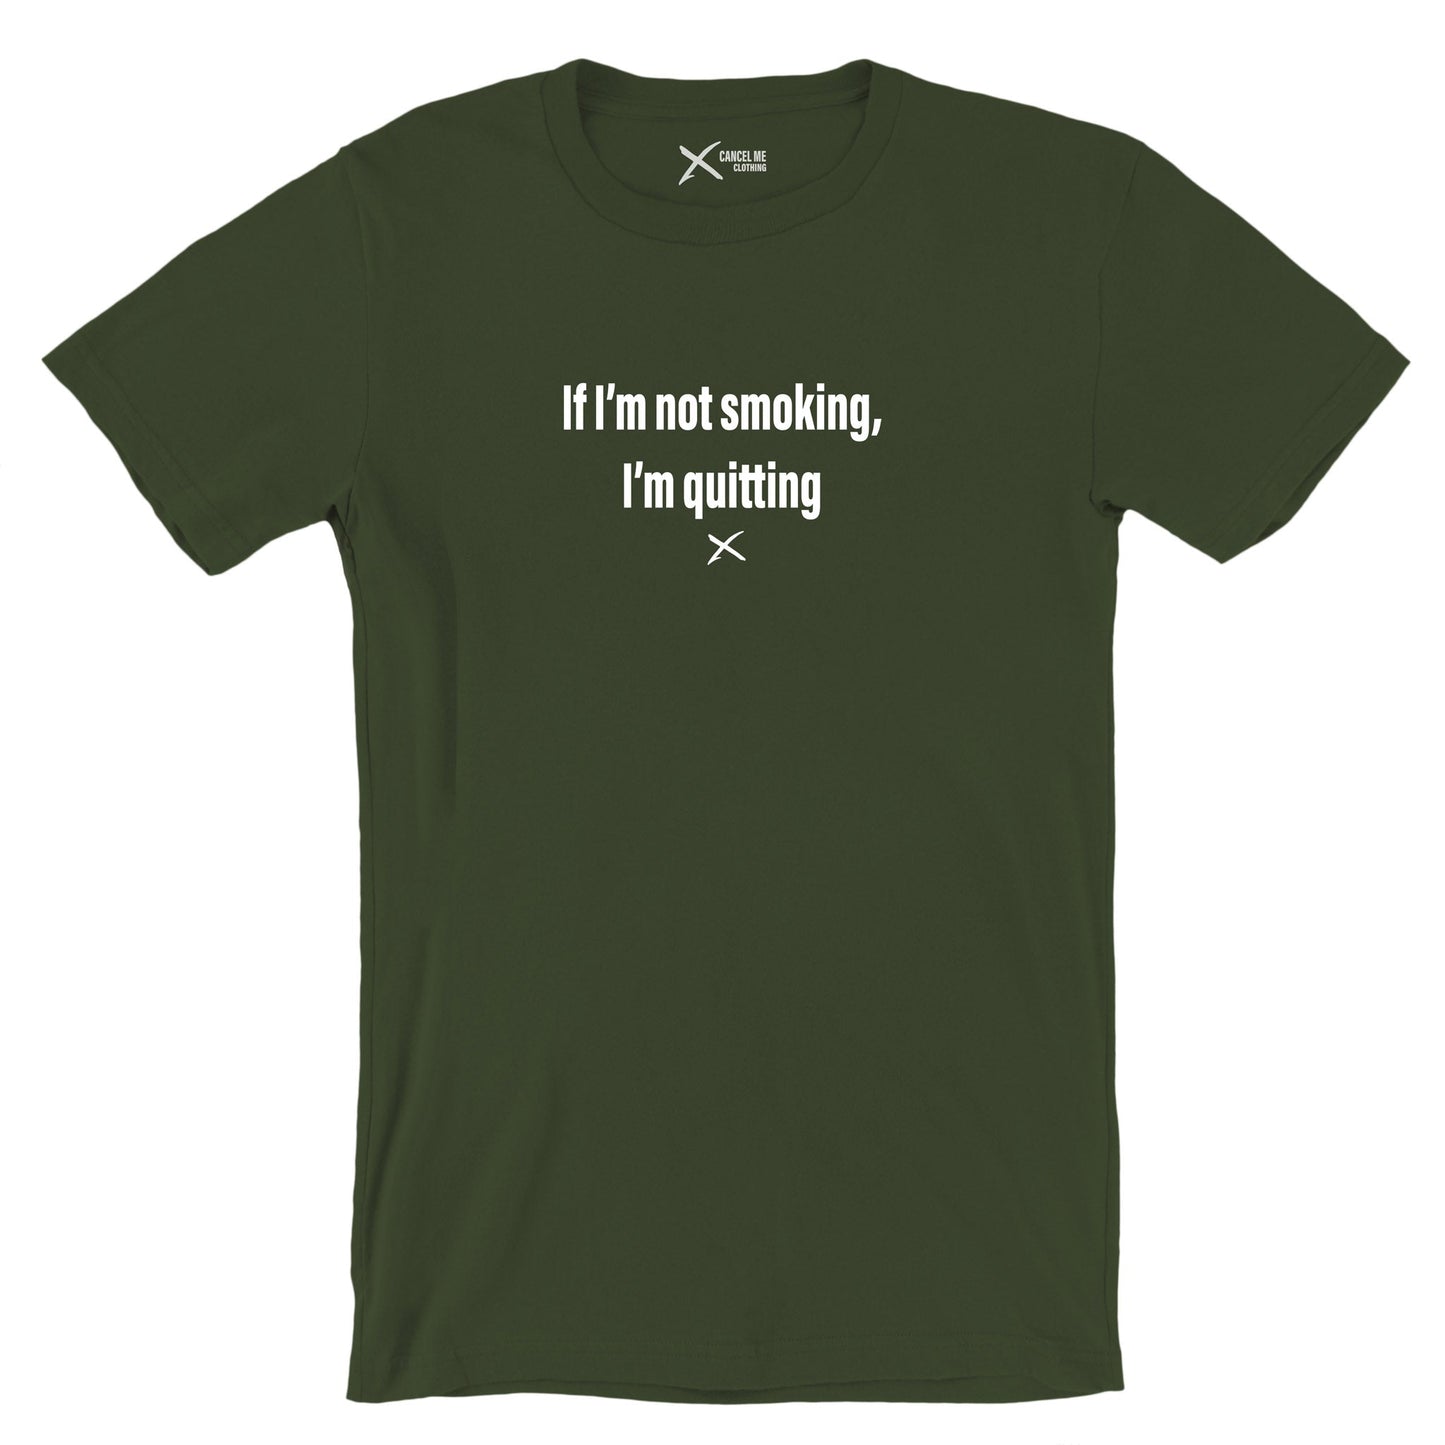 If I'm not smoking, I'm quitting - Shirt